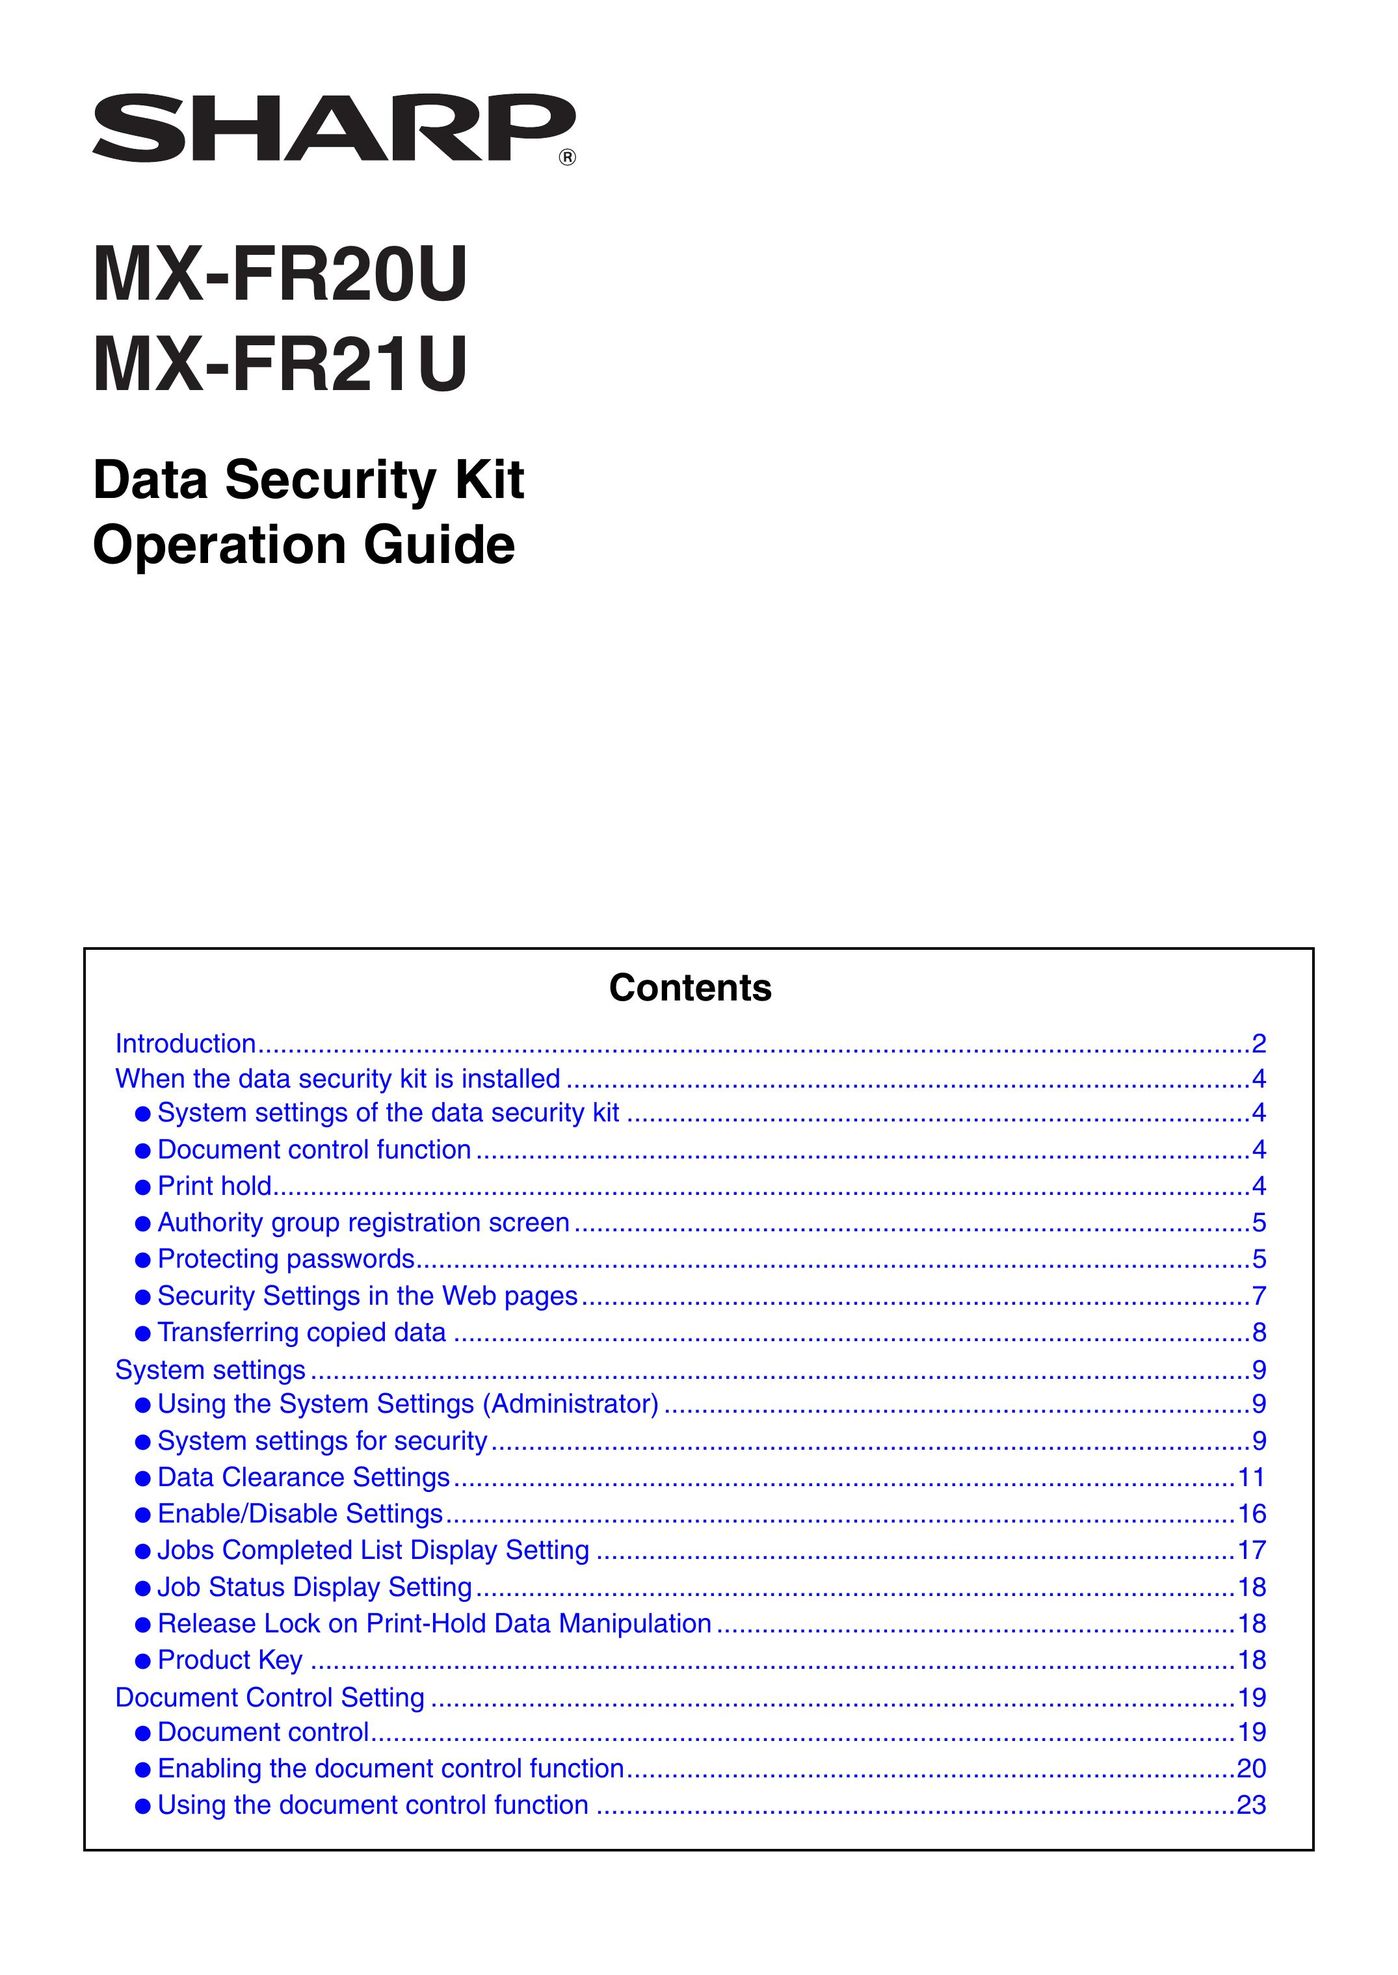 Sharp MX-FR20U Barcode Reader User Manual